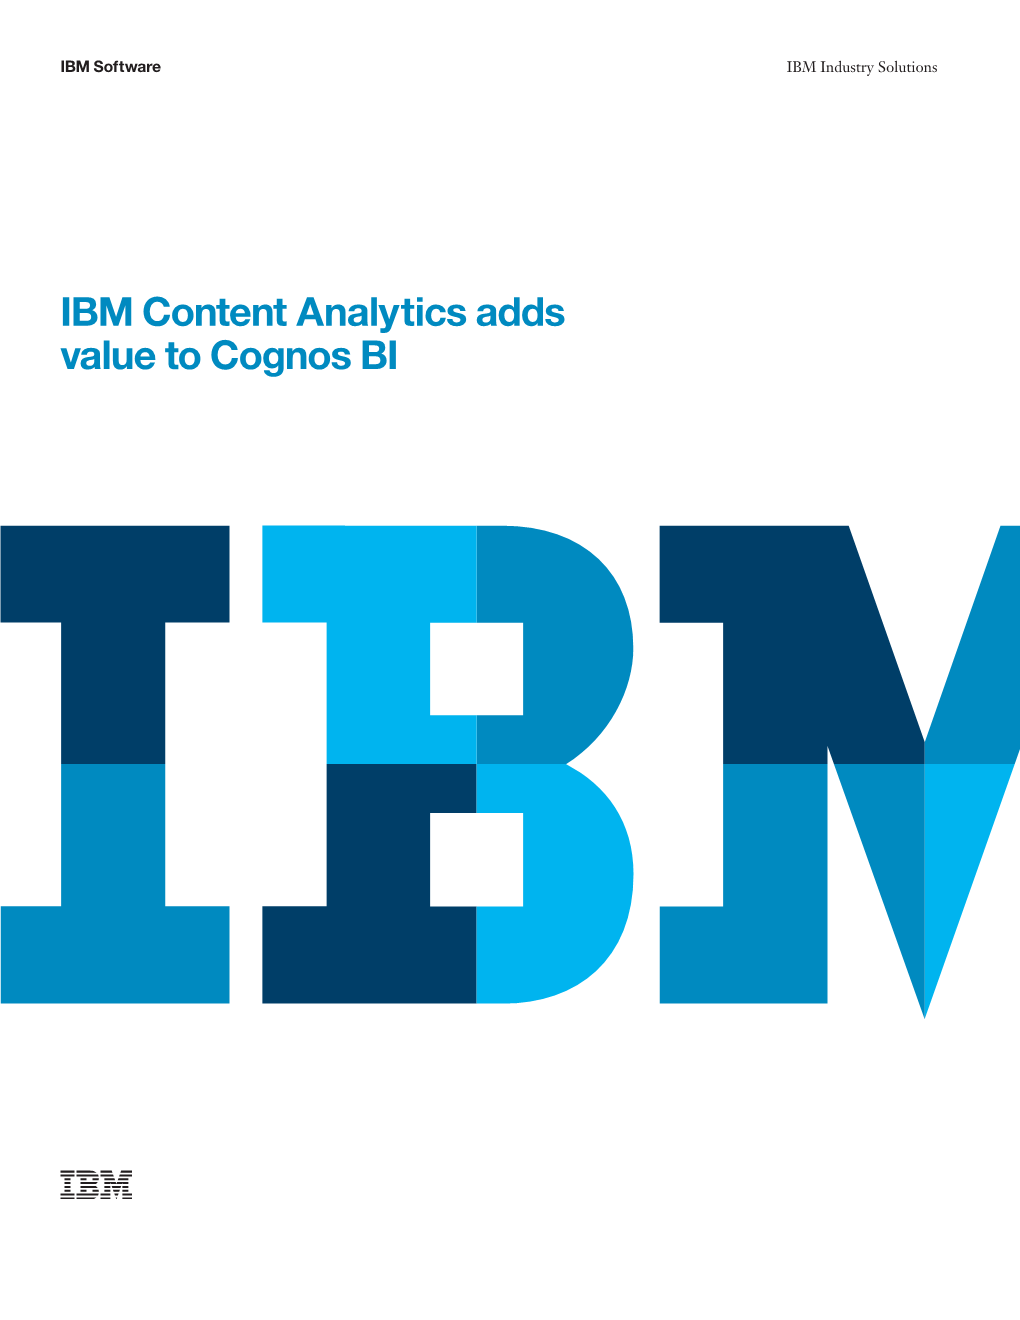 IBM Content Analytics Adds Value to Cognos BI 2 IBM Content Analytics Adds Value to Cognos BI